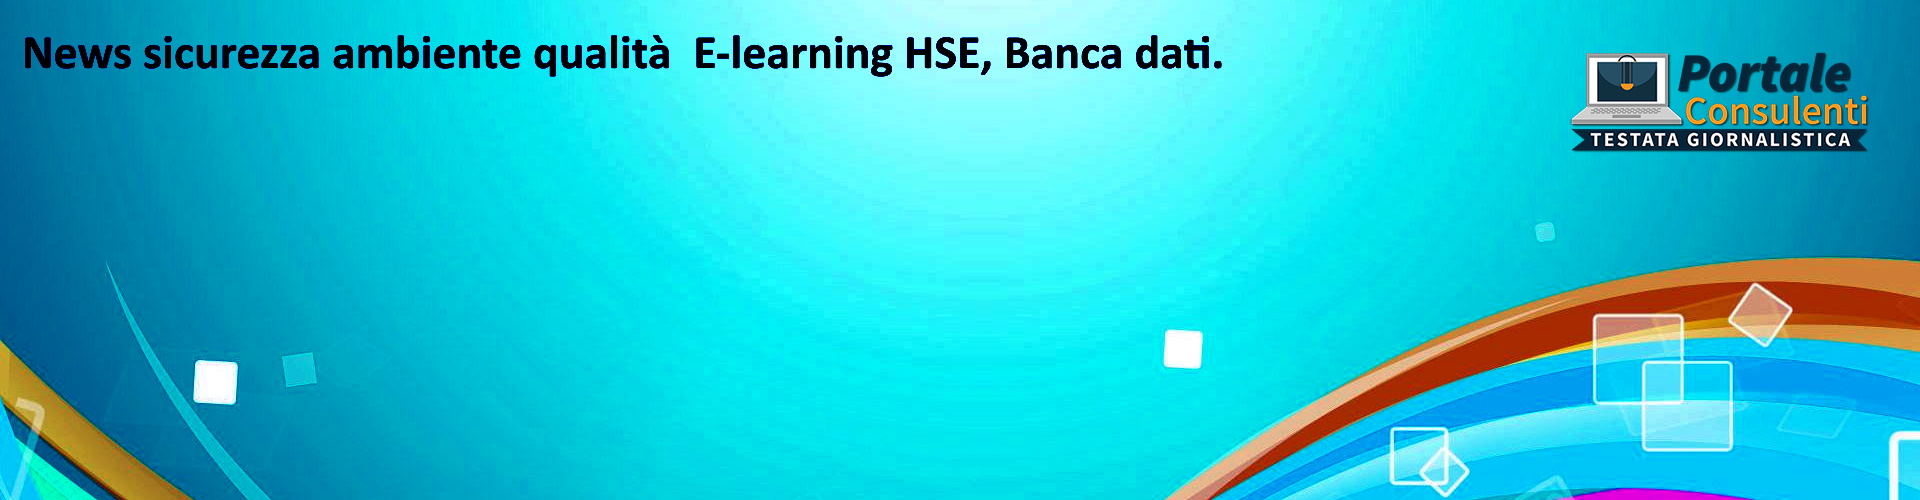 News sicurezza ambiente qualità E-learning HSE, Banca dati Newsletter